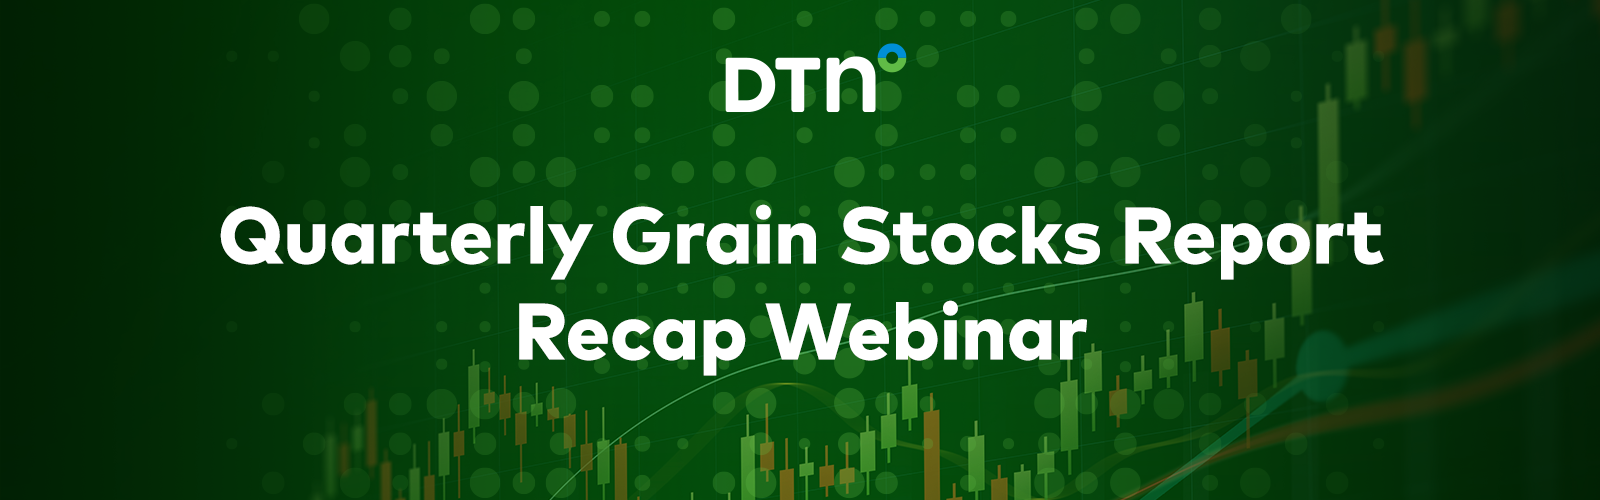 Quarterly Grain Stocks Report Recap Webinar